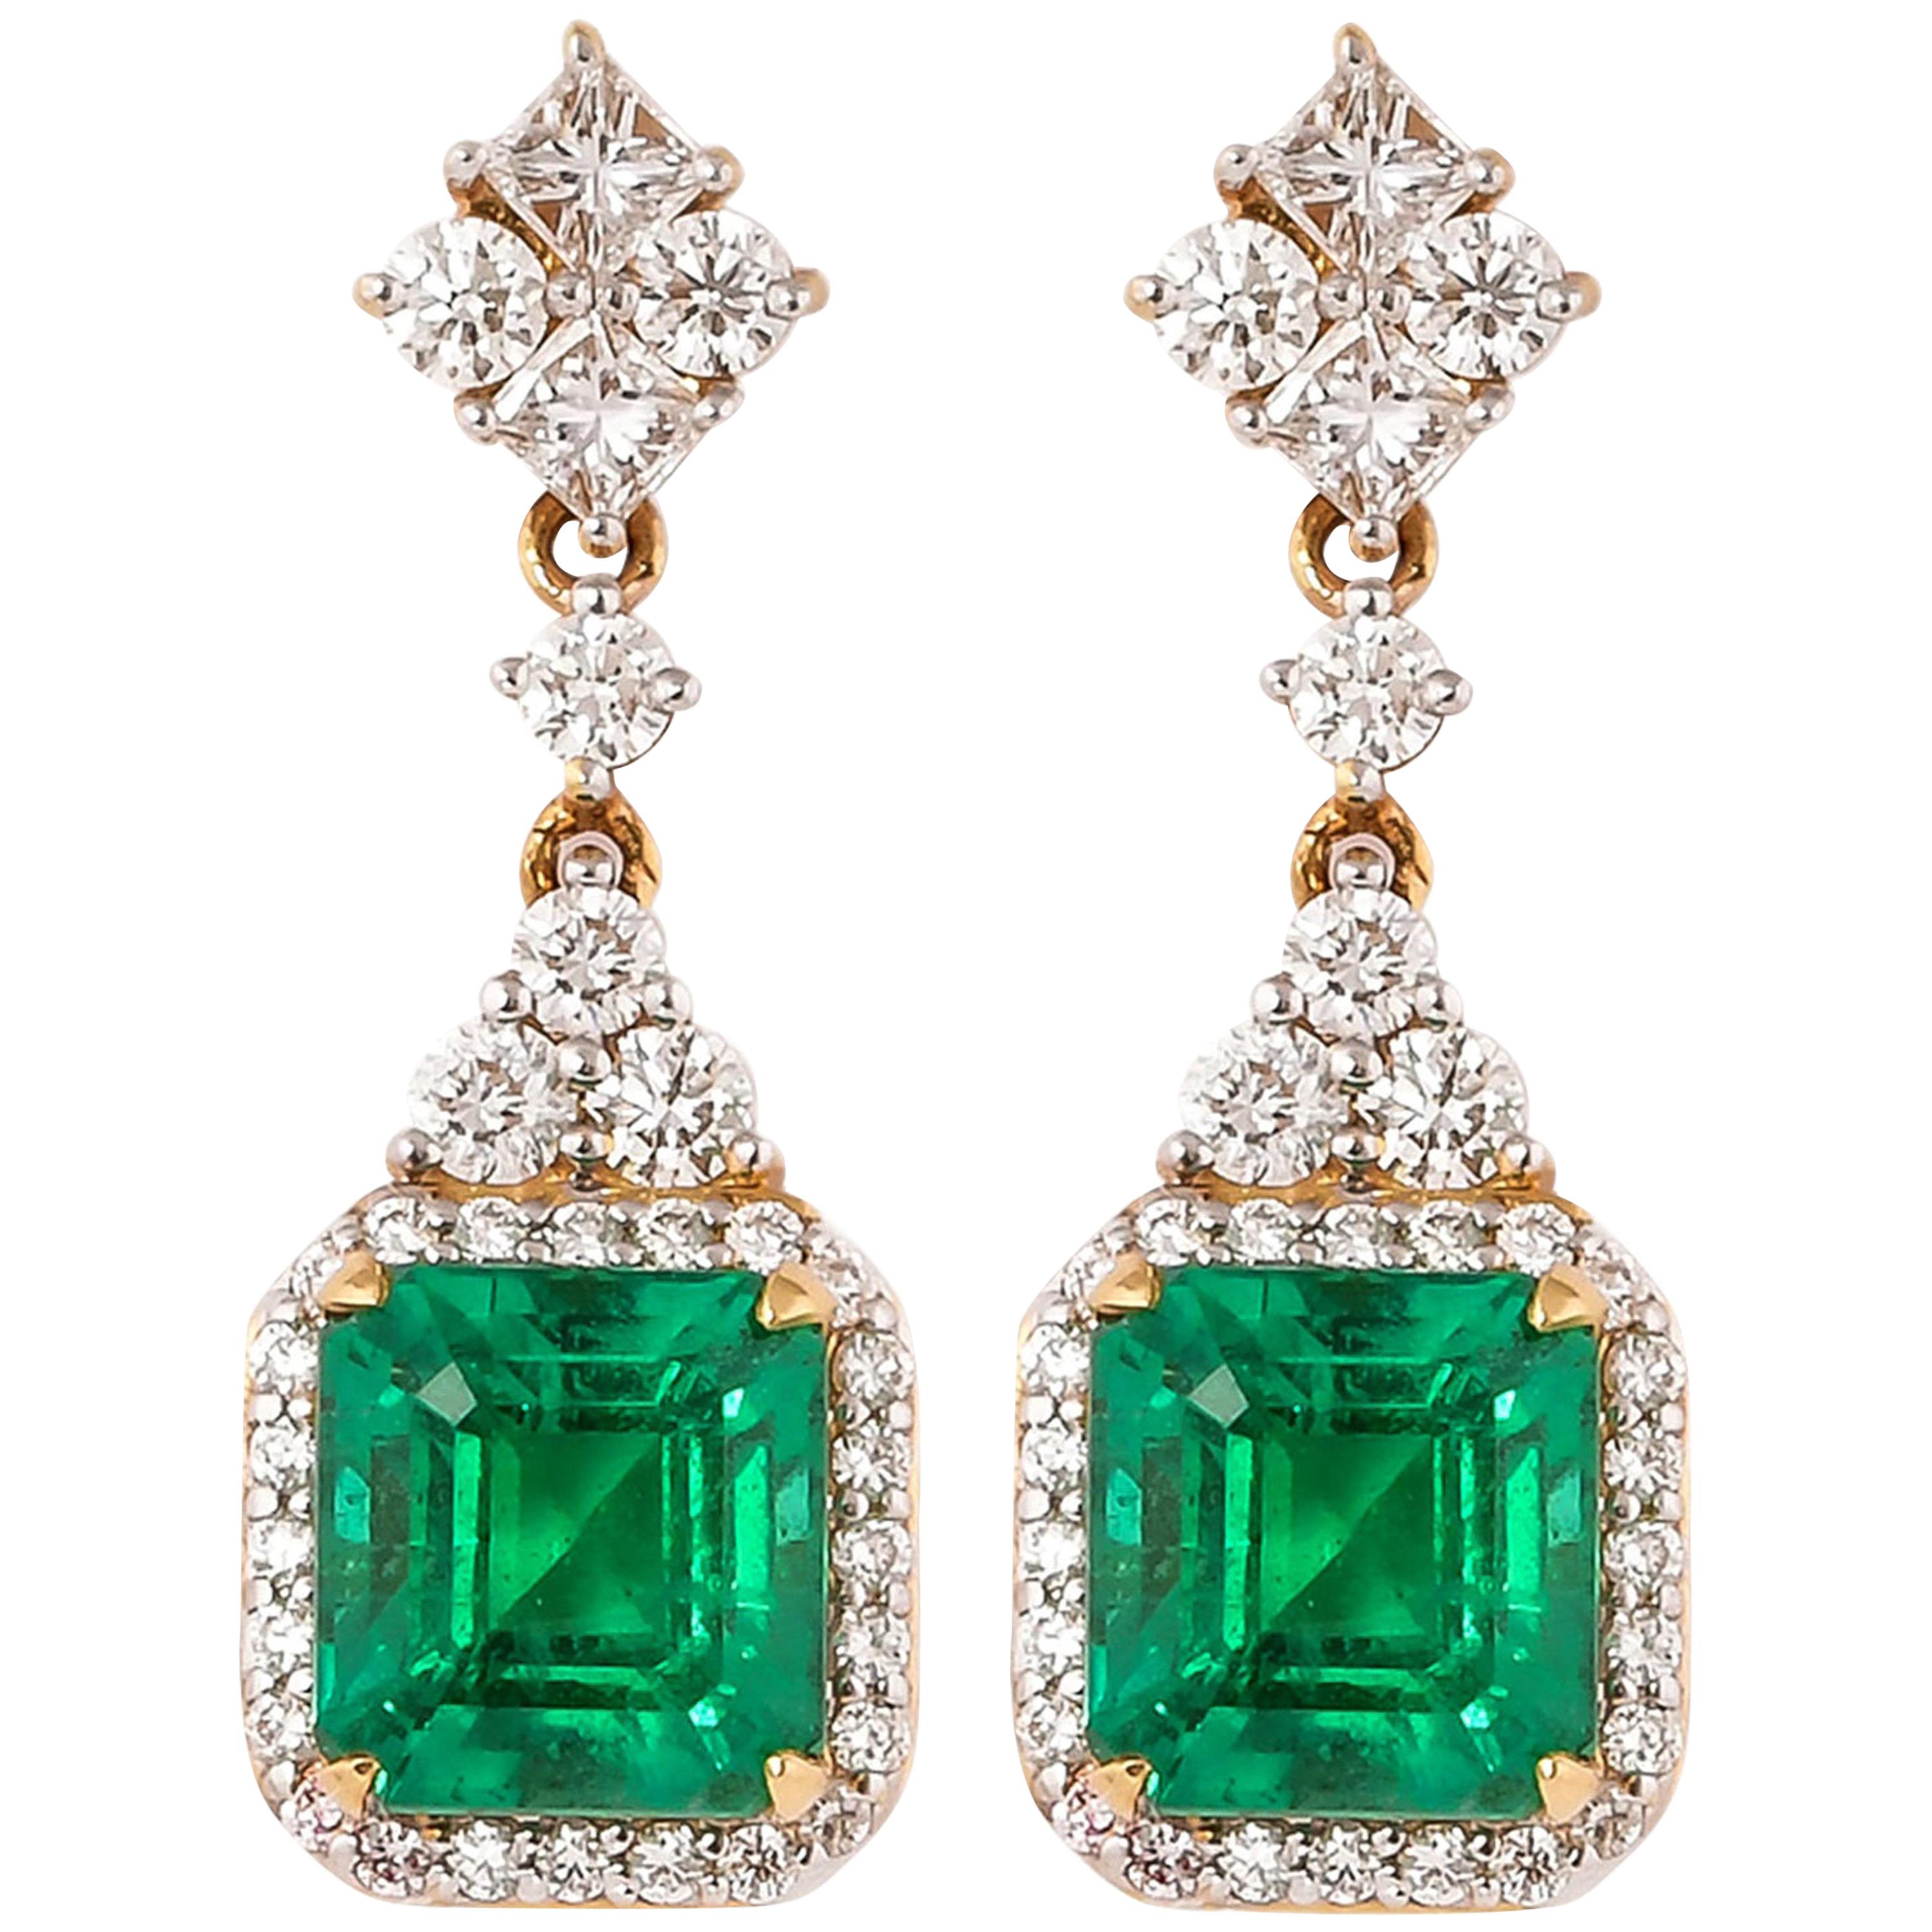 GRS Certified 5.0 Carat Emerald and Diamond Earrings in 18 Karat Yellow Gold